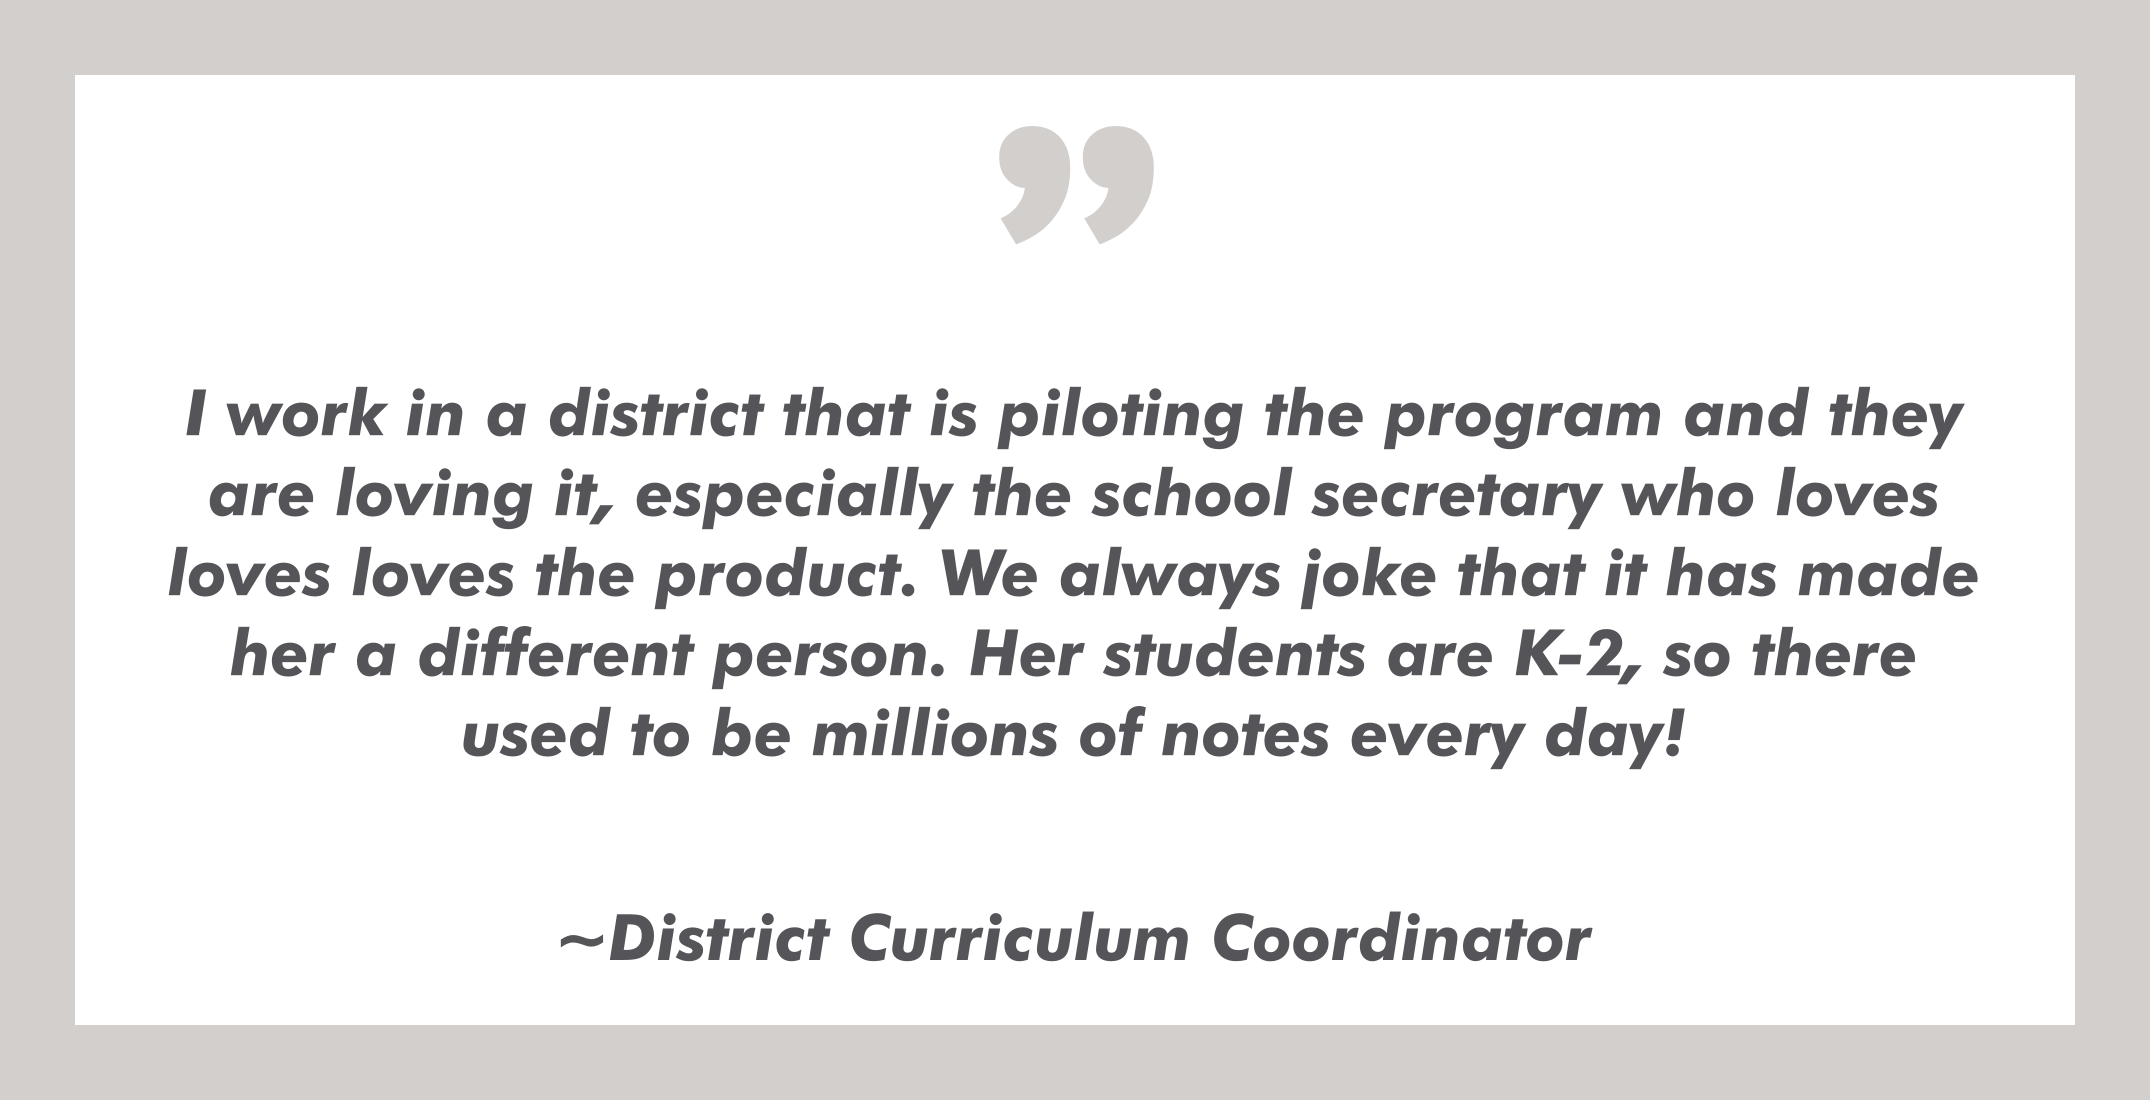 PickUp Patrol school dismissal system testimonial from school district curriculum coordinator